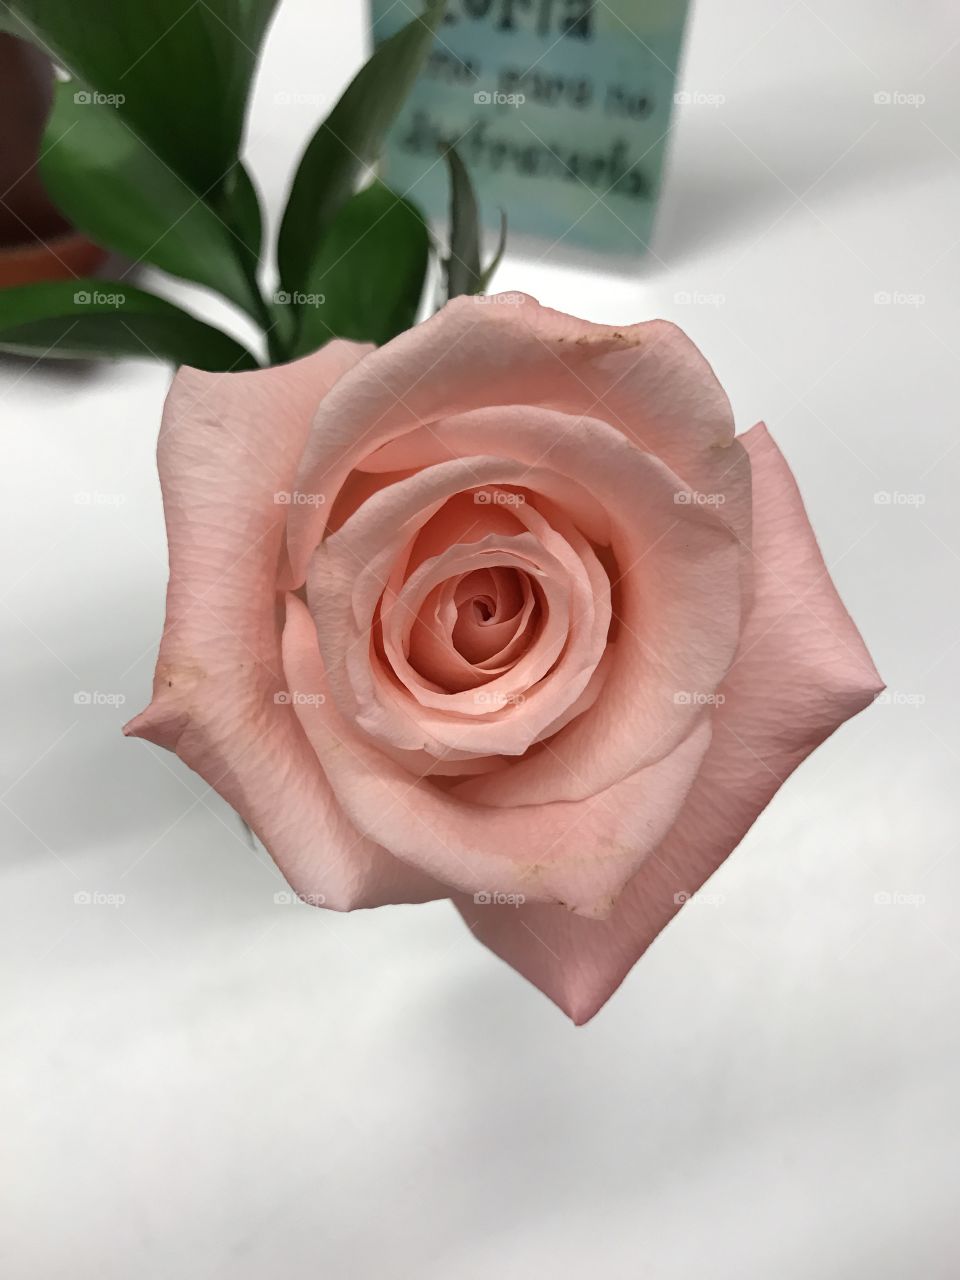 A rose rose!